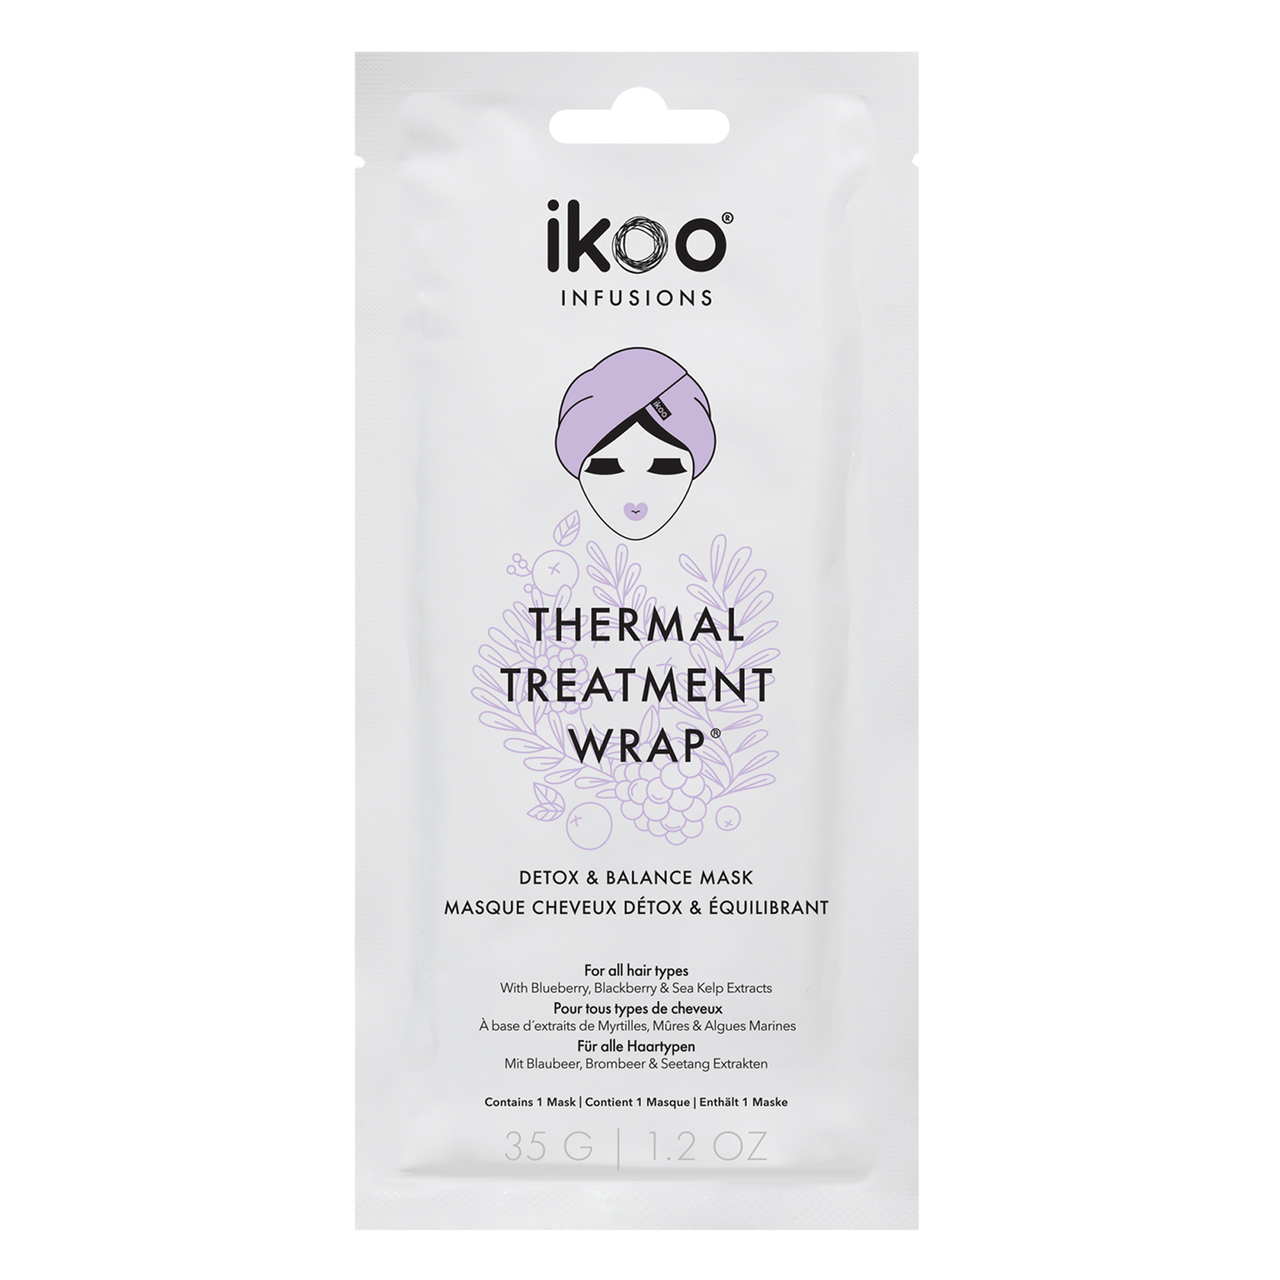 ikoo Thermal Treatment Wrap Detox & Balance Hair Mask 1.2 fl. oz.